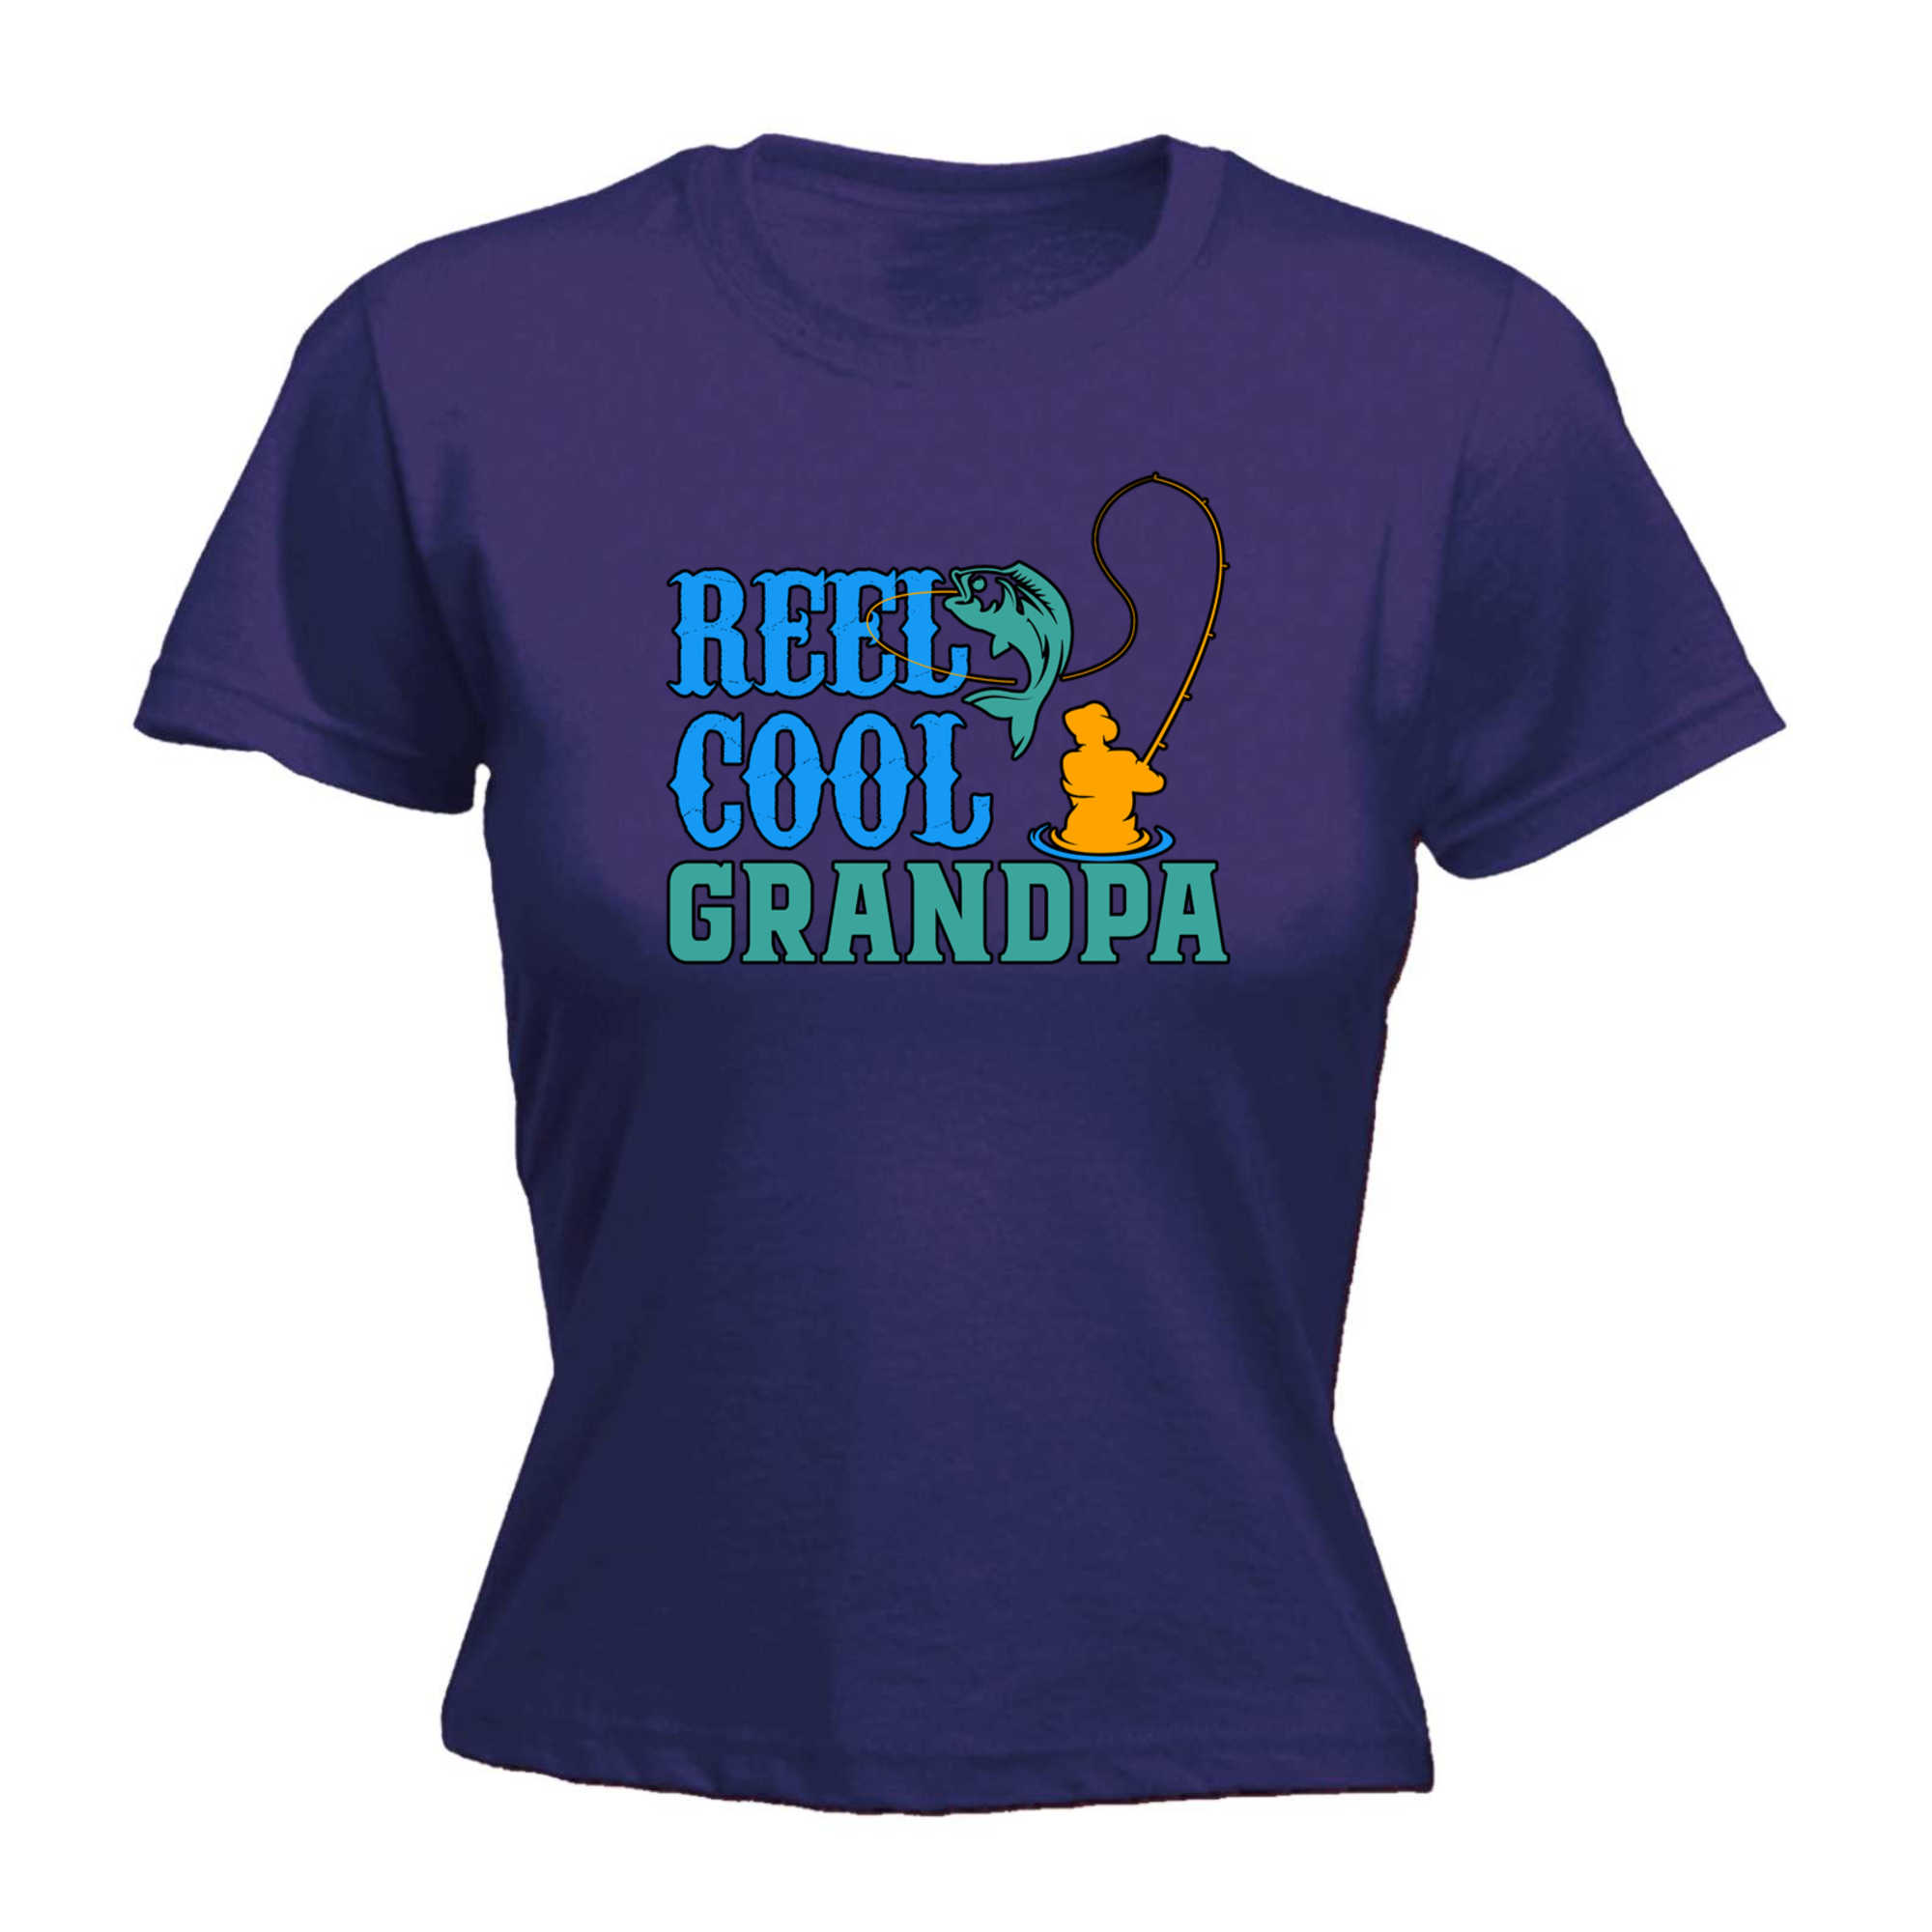 Reel Cool Grandpa Fishing Fish - Funny Womens Ladies Top T Shirt T